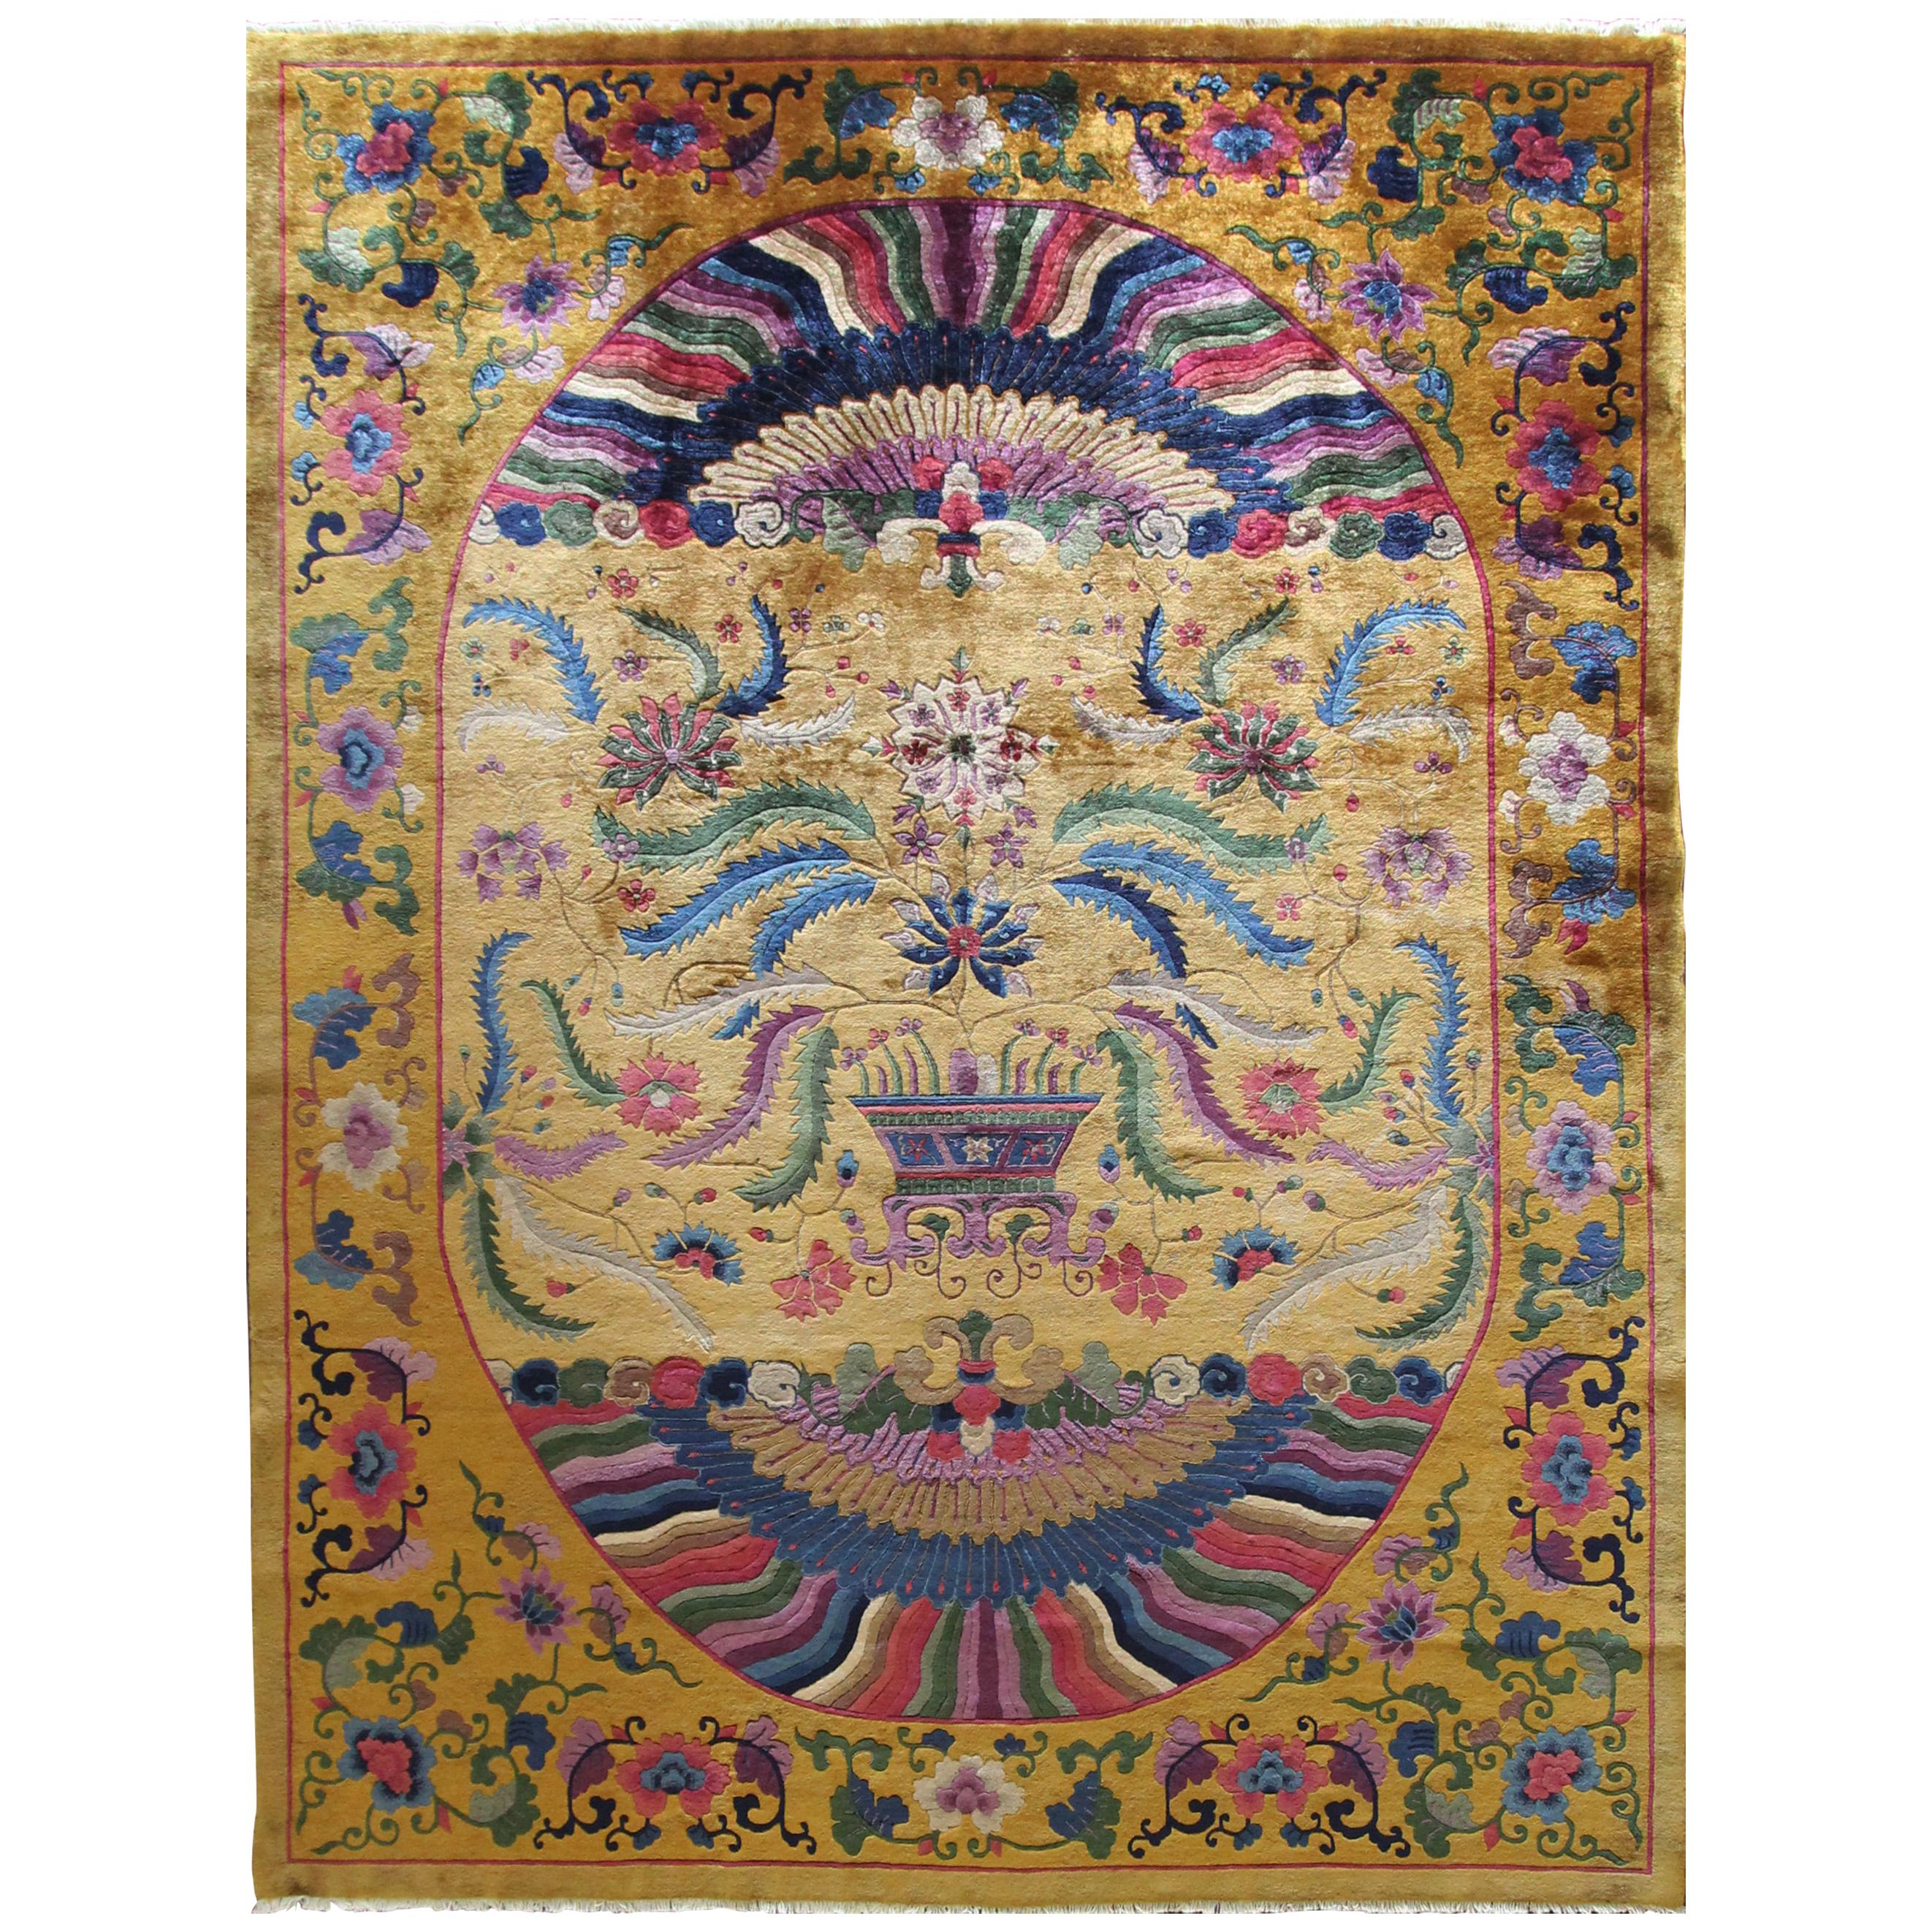 Antique Art Deco Carpet, Imperial Dynasty Rug, 8'10" x 11'7"